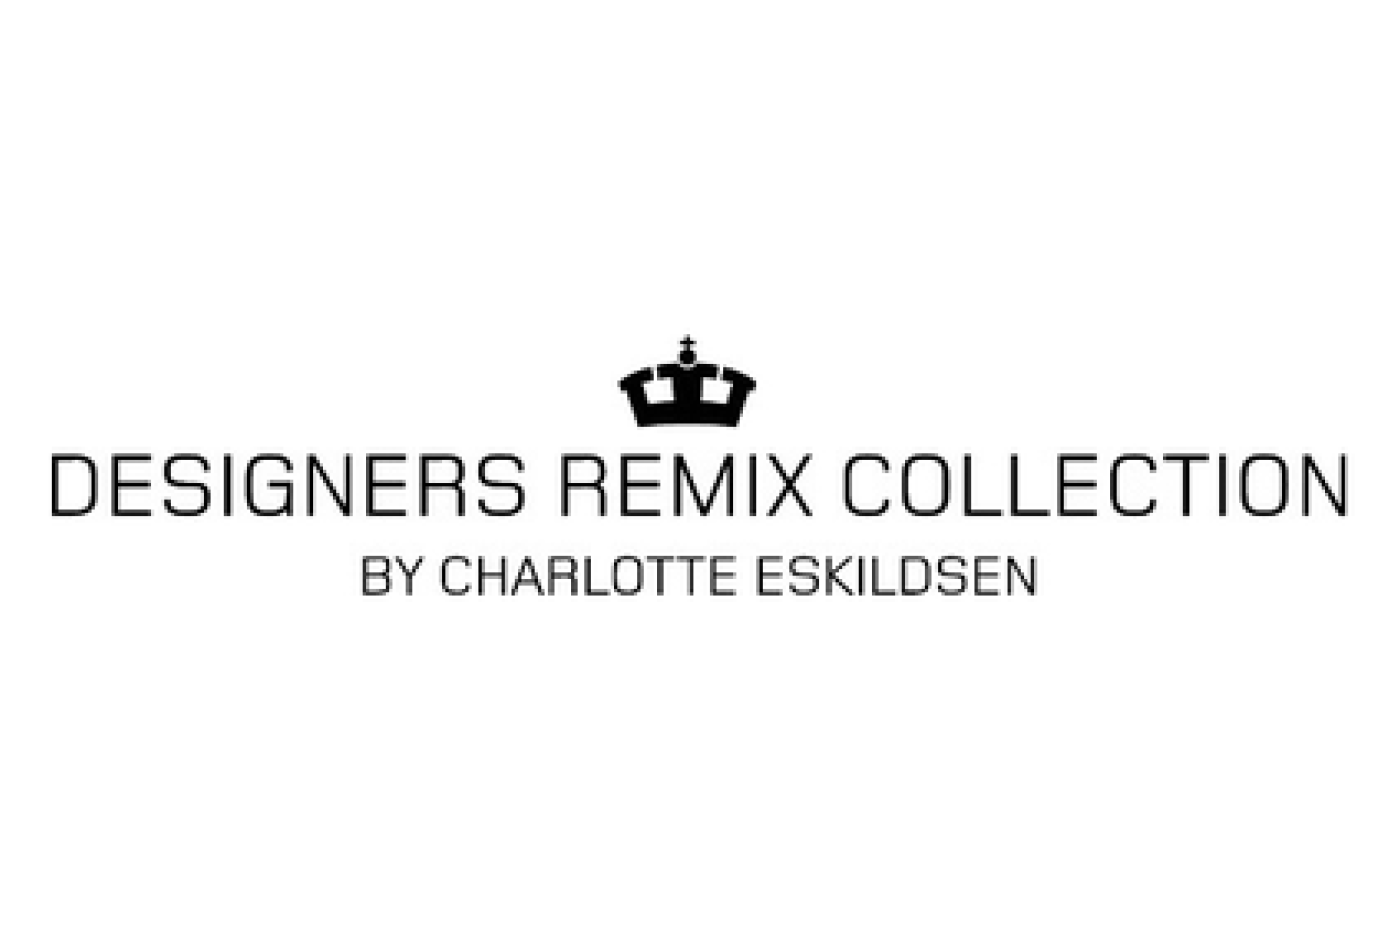 Designers Remix VIP event